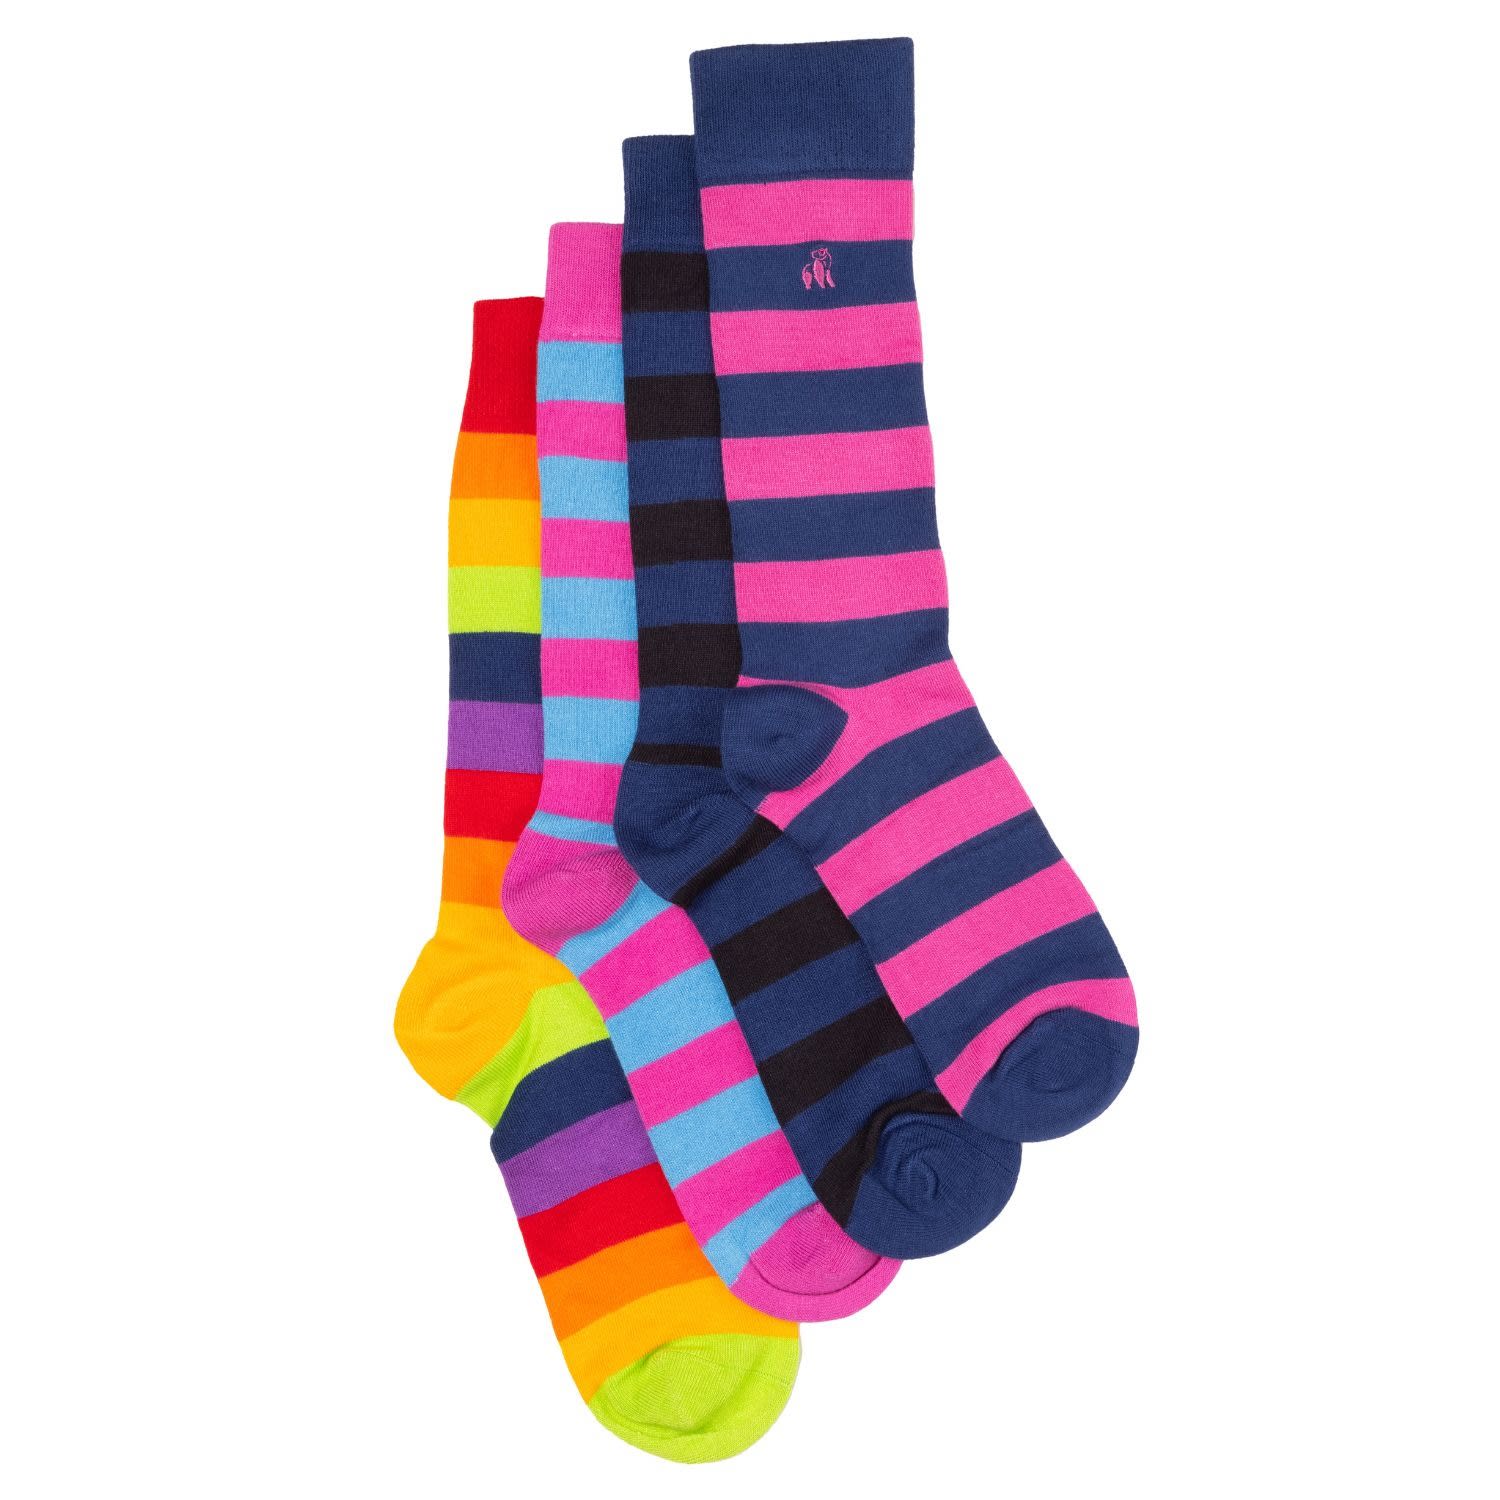 Swole Panda Men's Pride Stripe Sock Bundle - Four Pairs In Black/blue/pink